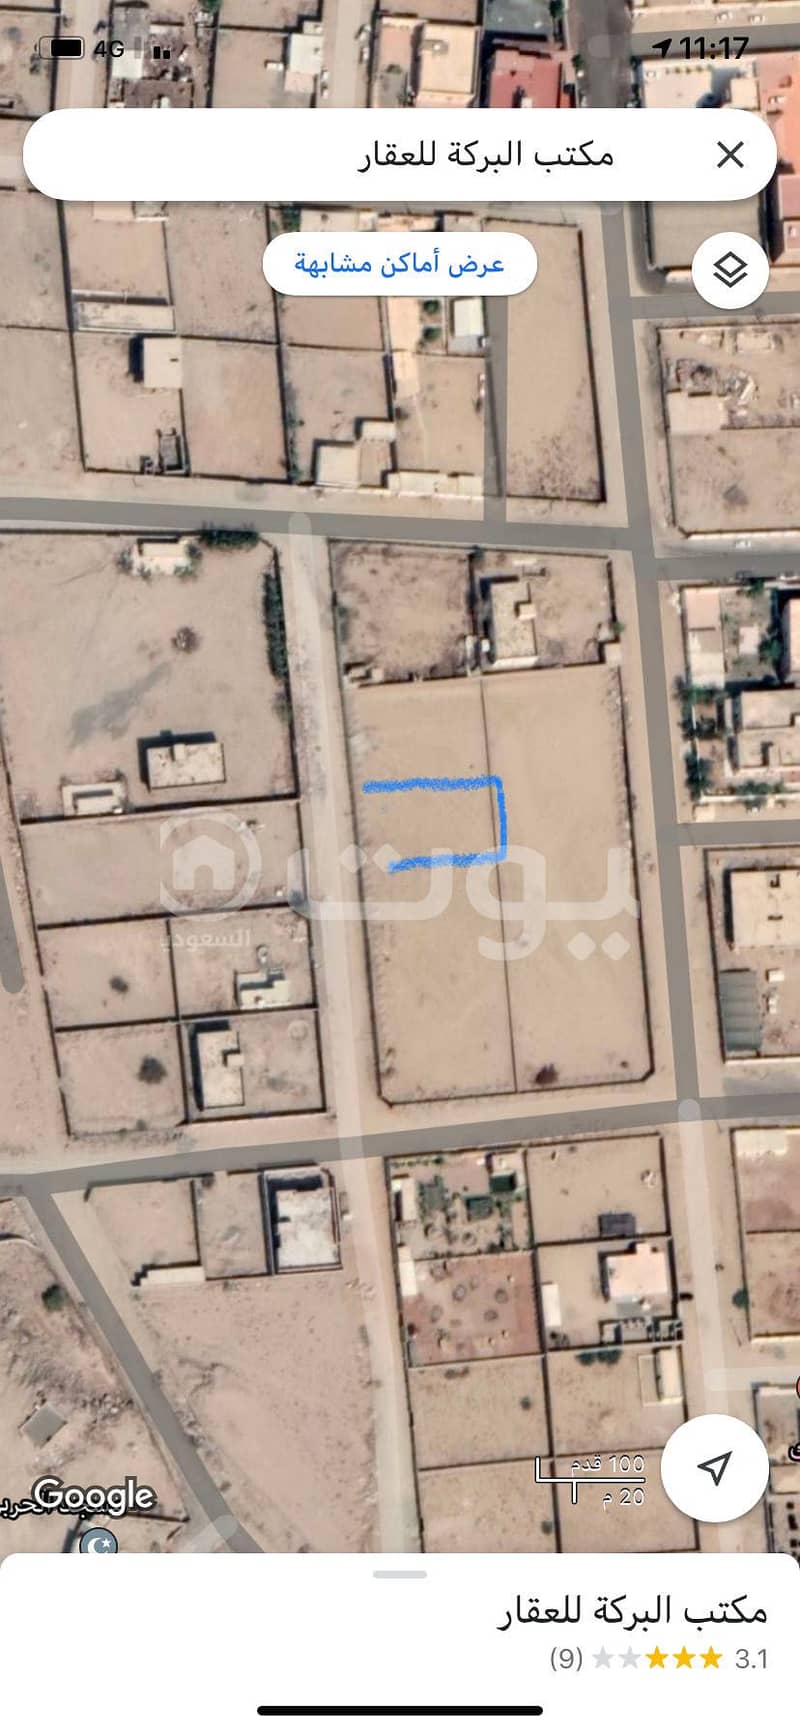 Plot of land for sale in Al-Harazat, north of Jeddah